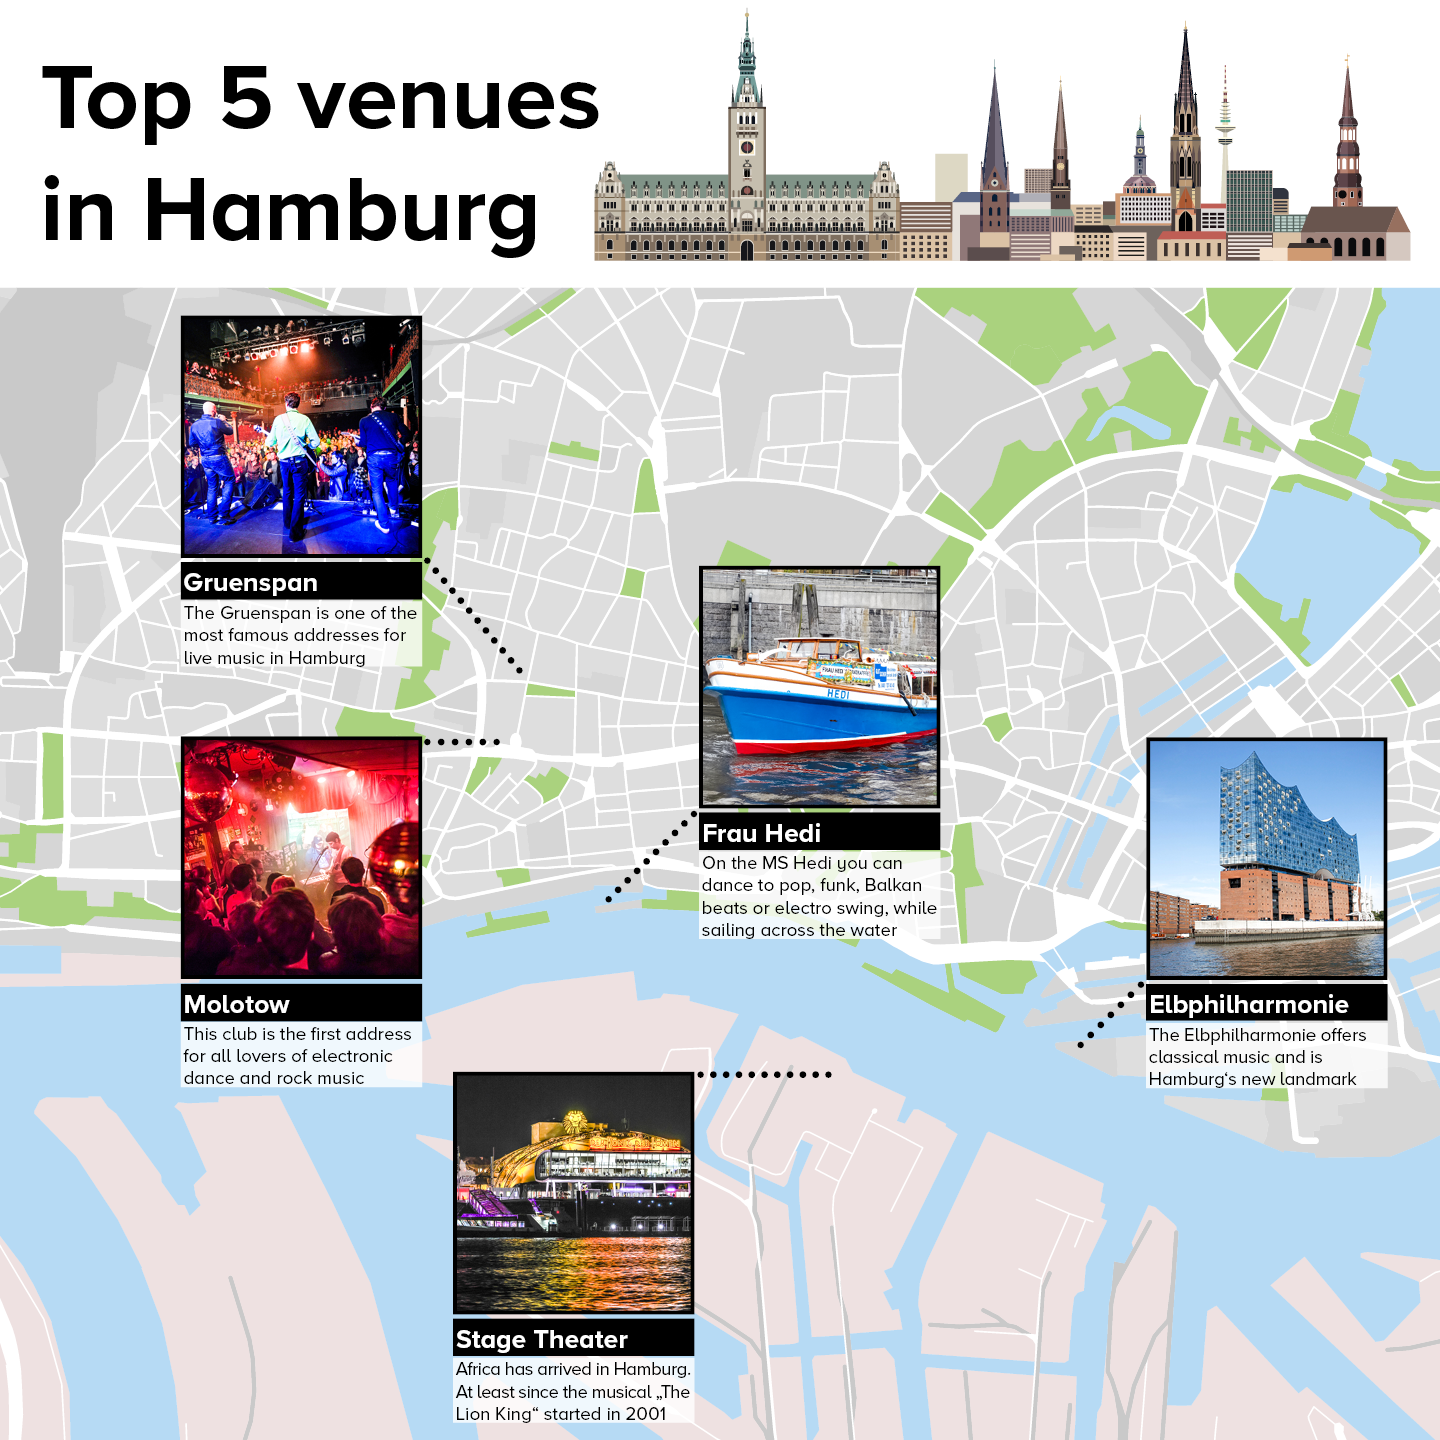 Top 5 venues in Hamburg: Elbphilarmonie, Stage Theater, Frau Heidi, Molotow, Gruenspan